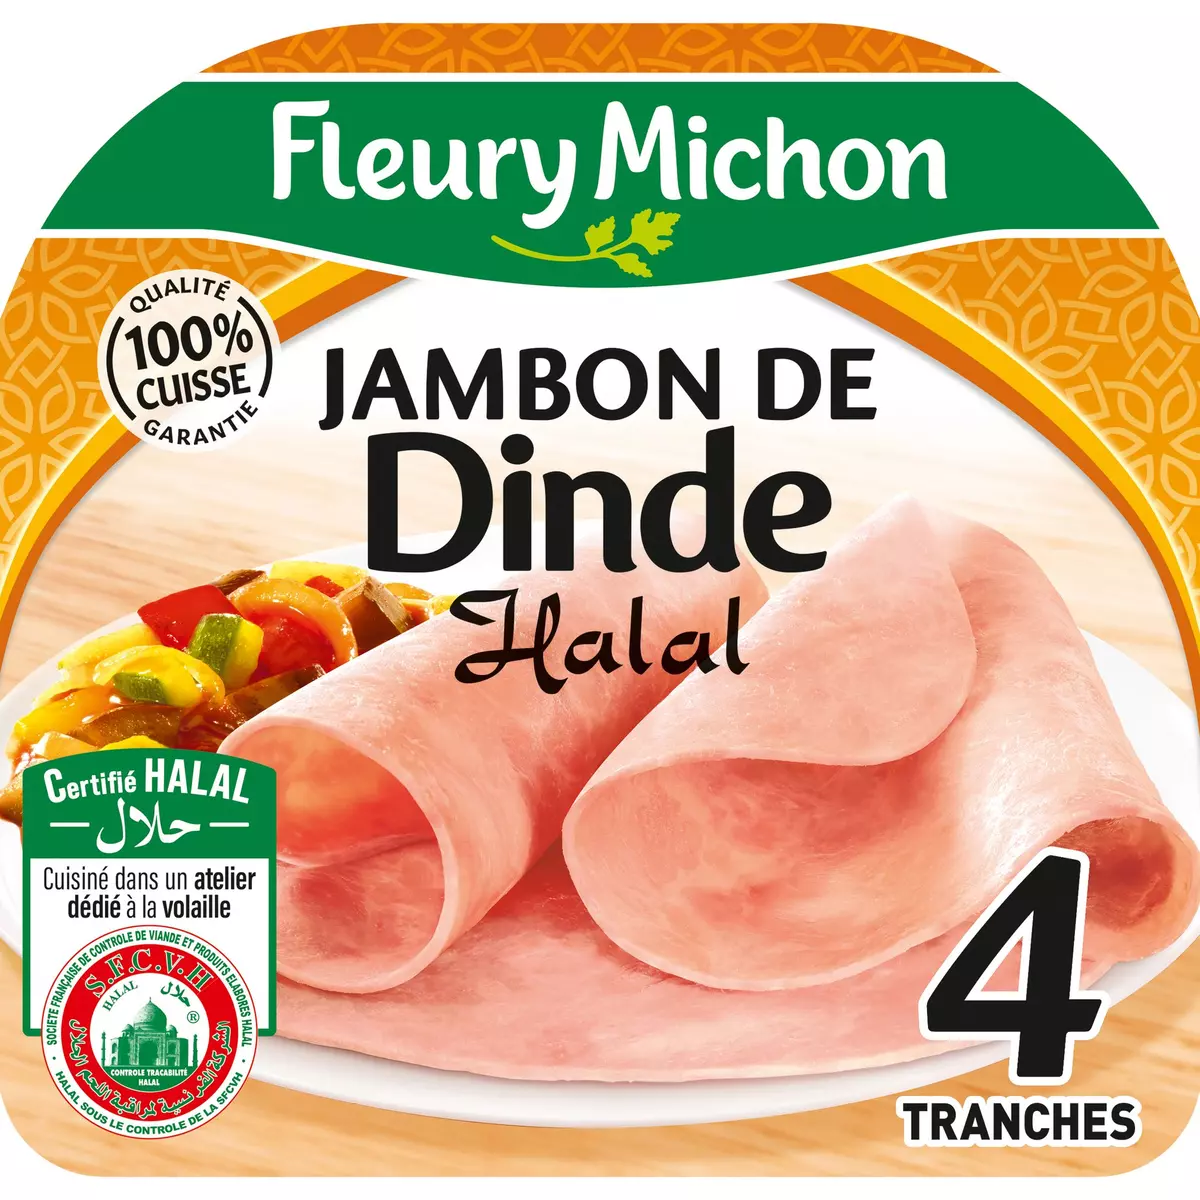 FLEURY MICHON Jambon de dinde halal 4 tranches 160g